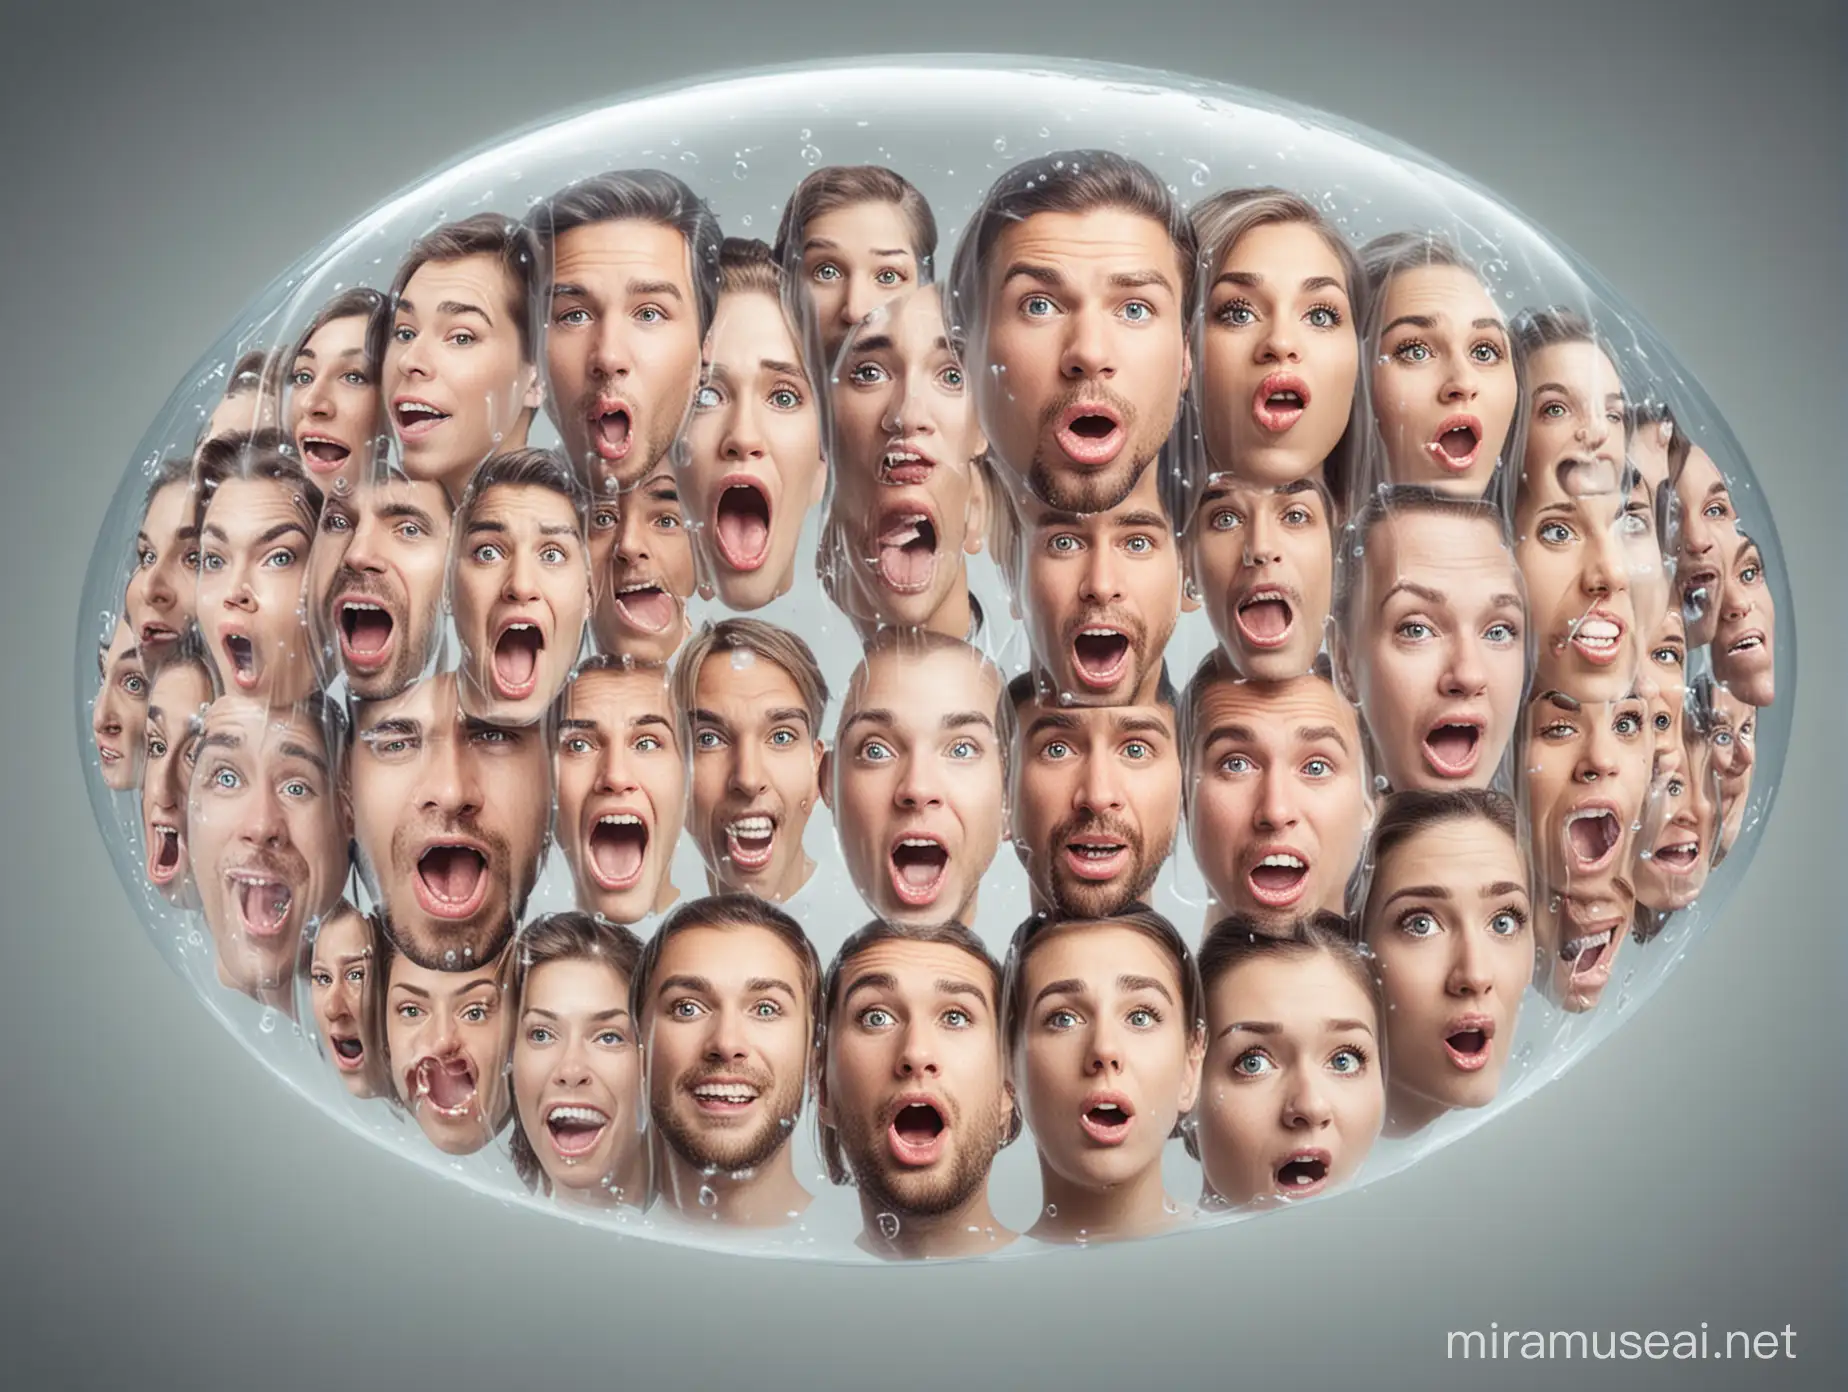 human faces in speak bubble